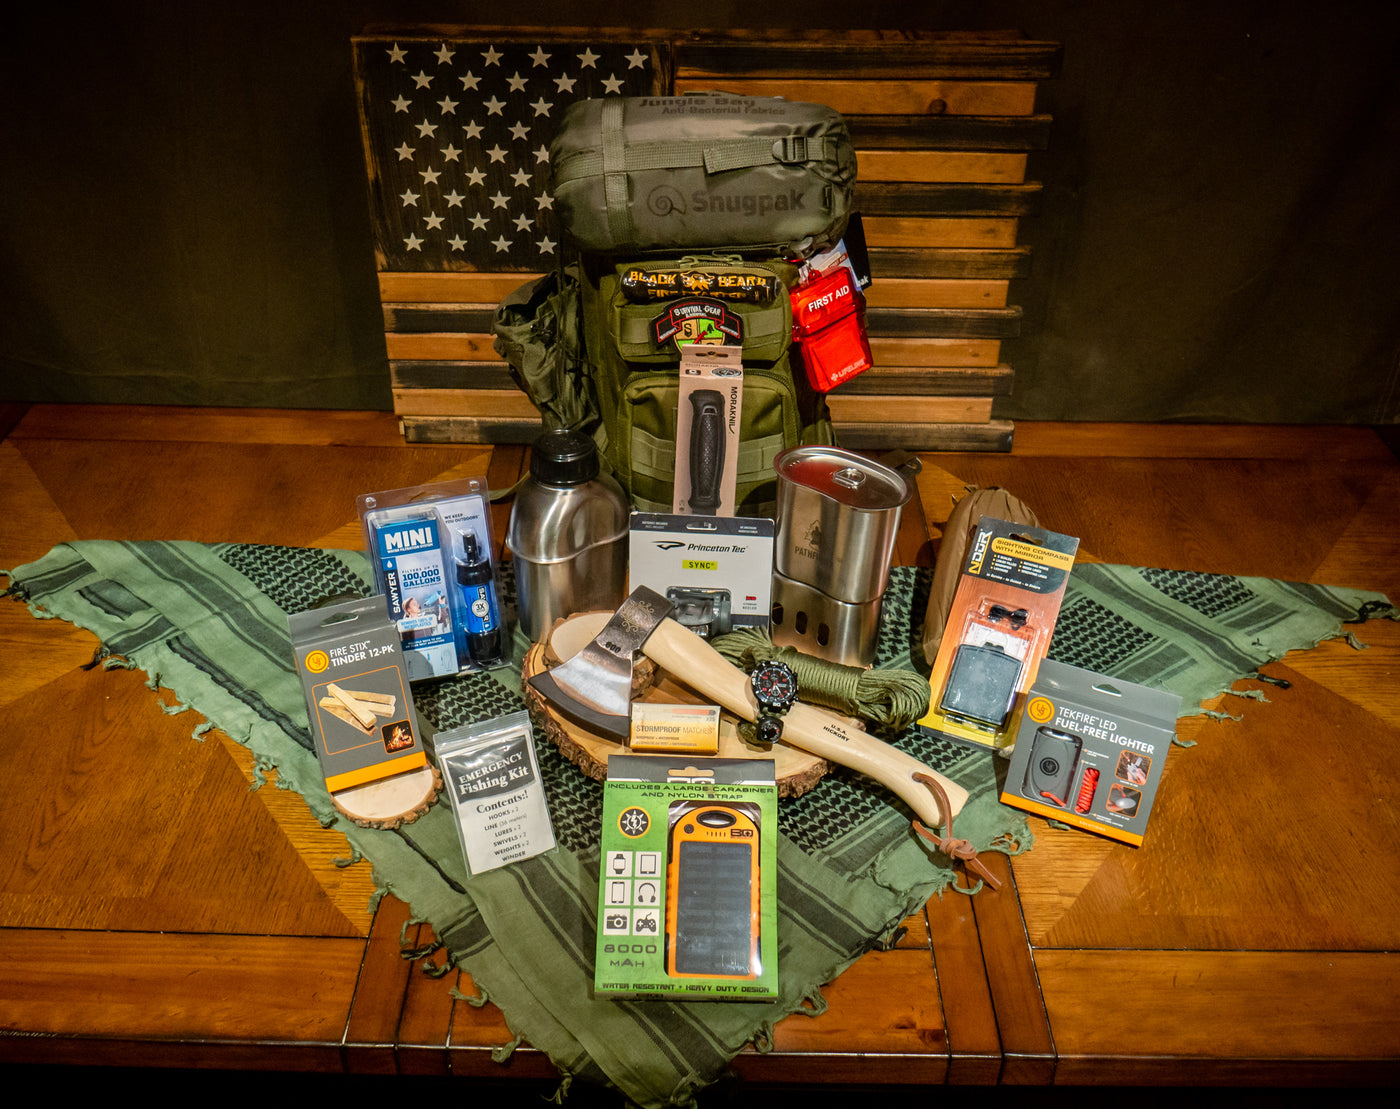 Bushcraft Kit - Survival 1st Aid Kit Bug Out Bag Emergency Survival Kit